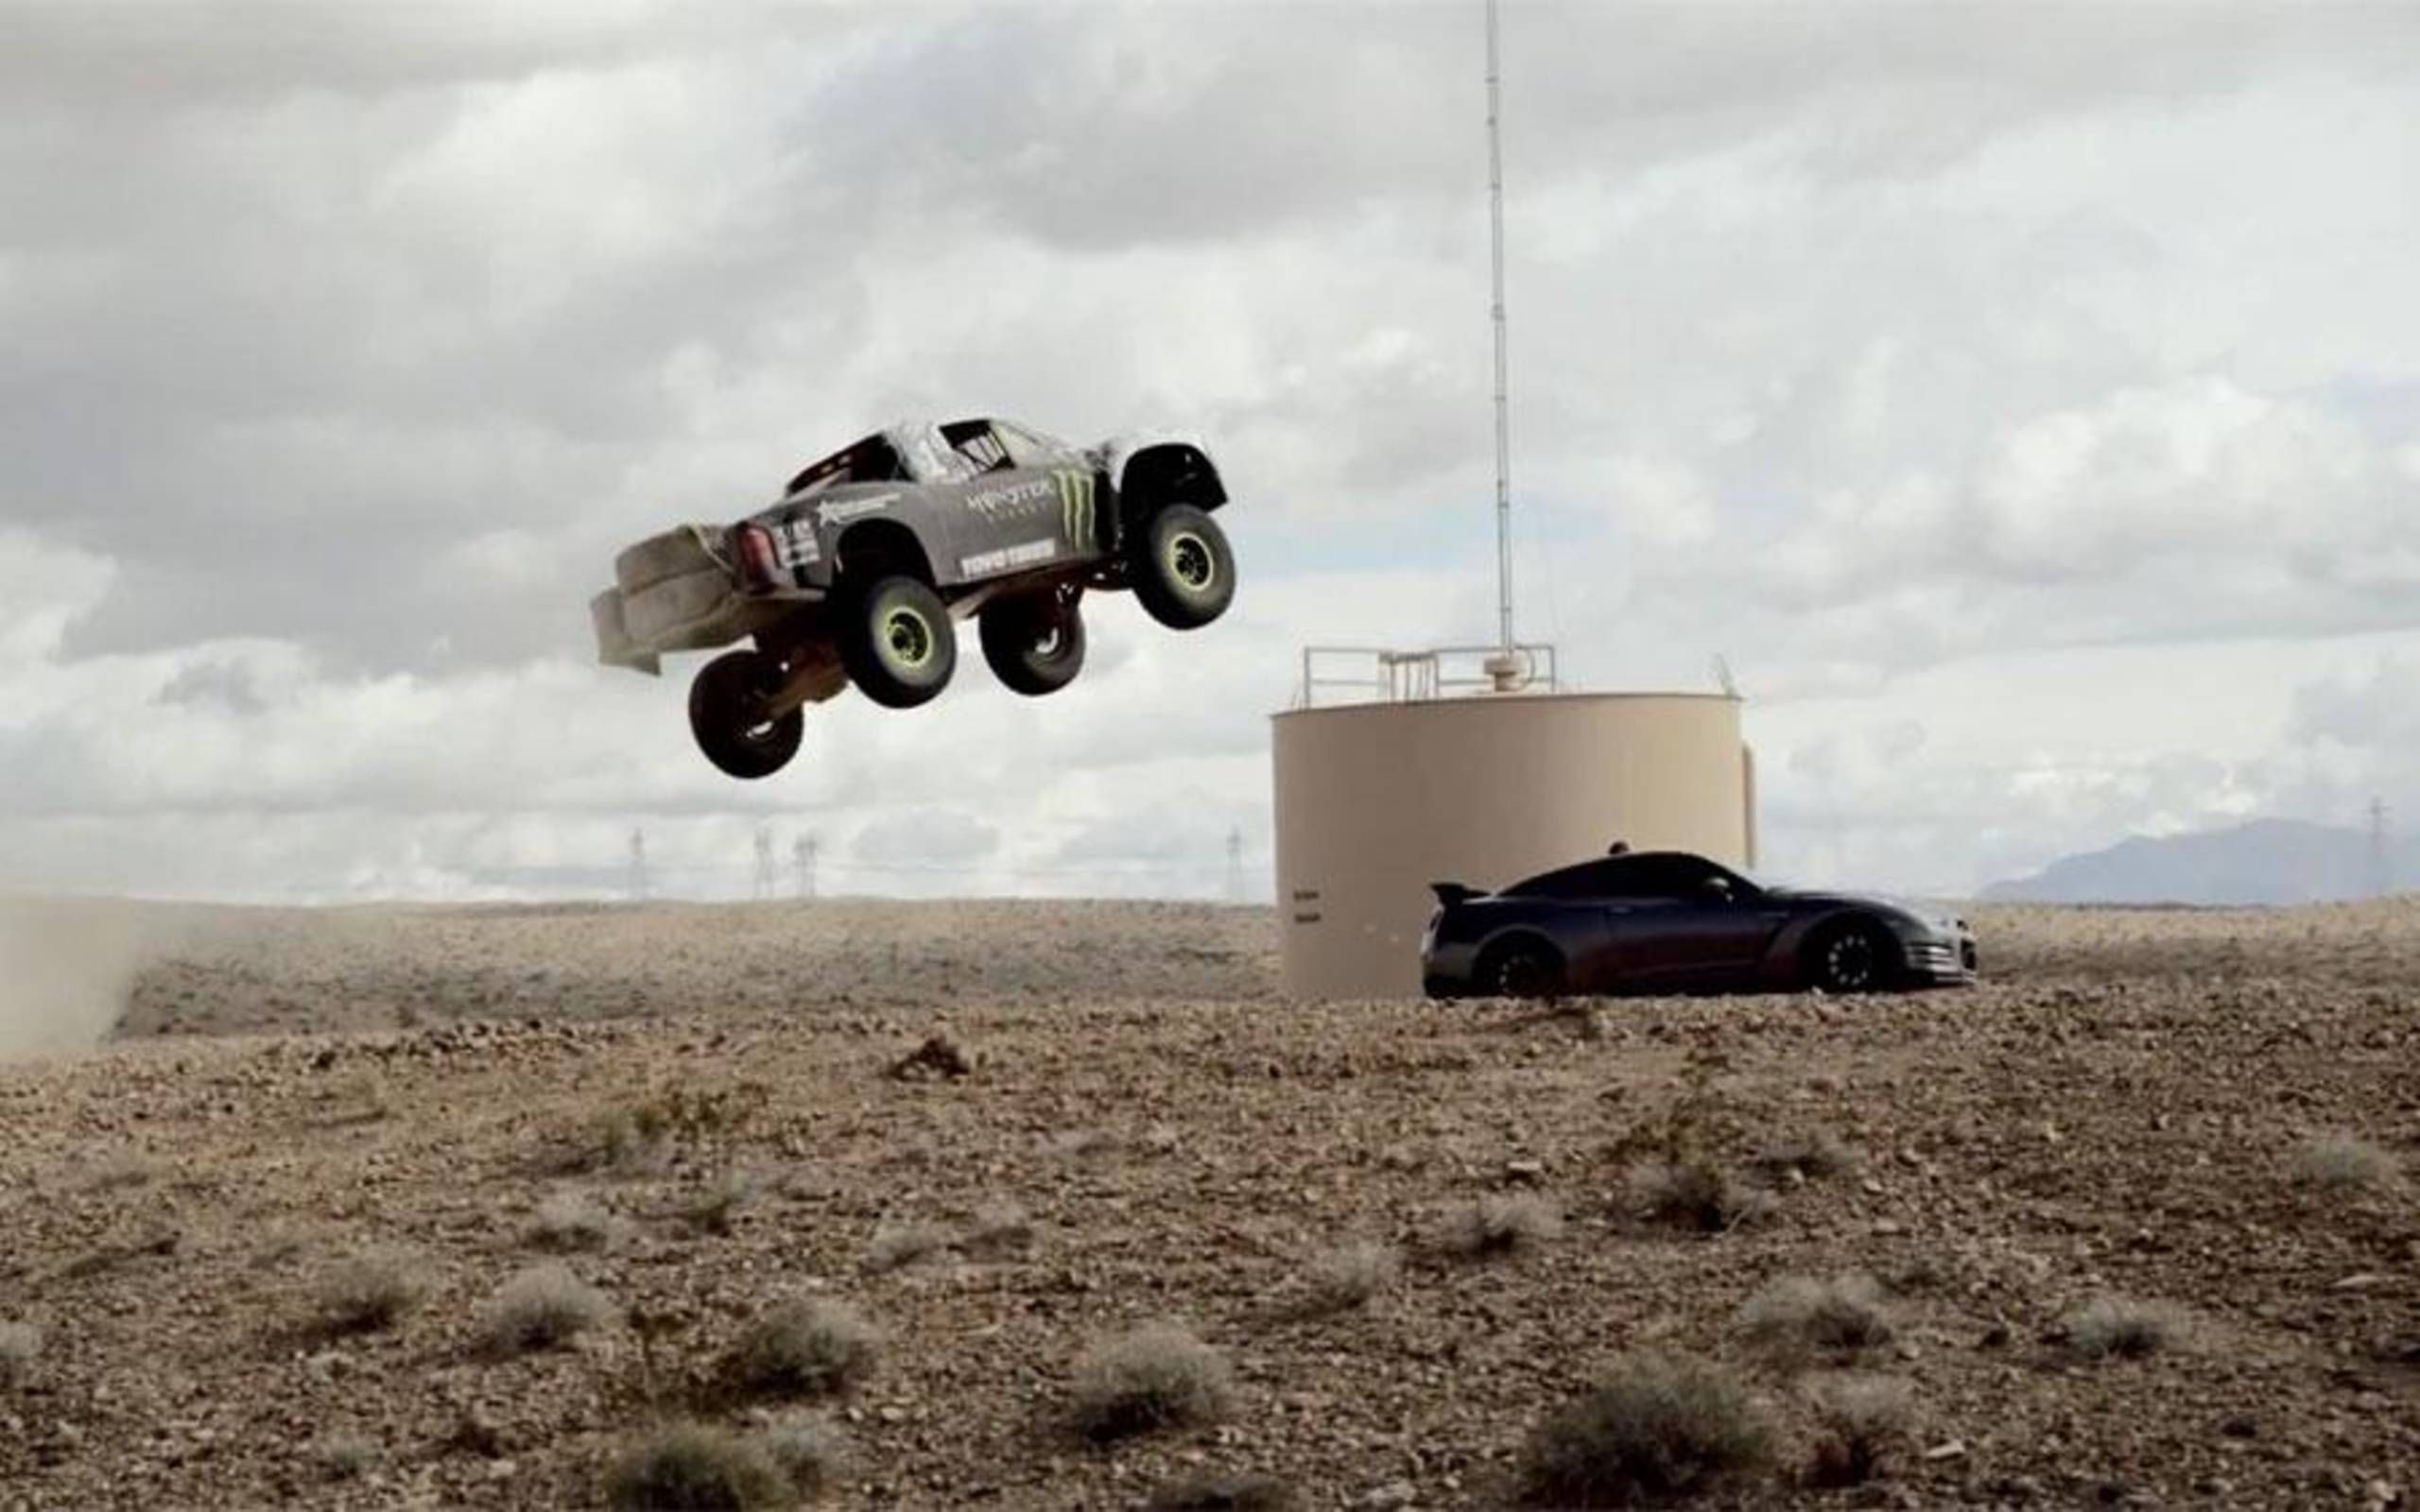 Rocking-across-desert-with-Baldwin,-Monster-Energy-truck